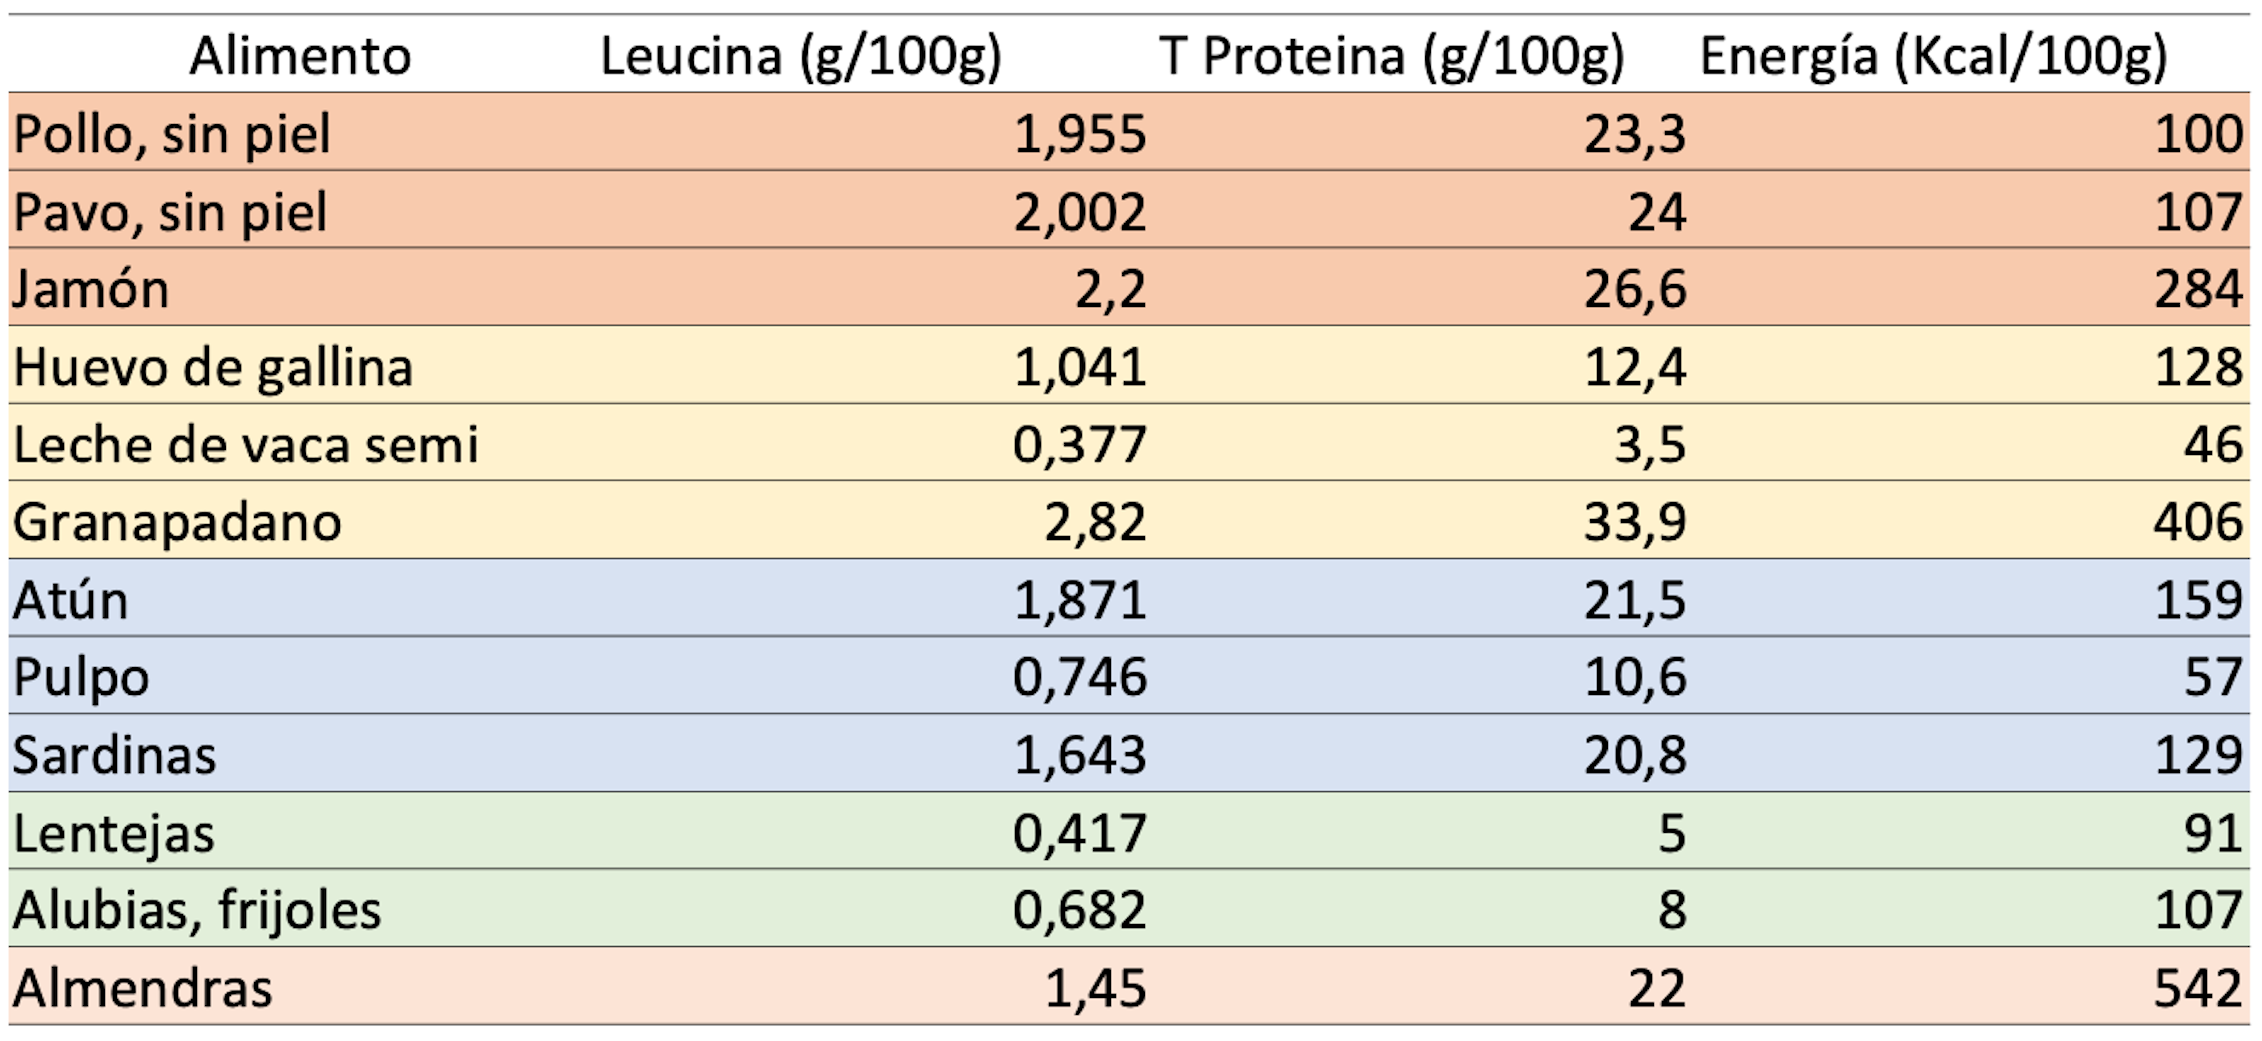 Gramos de proteína por kg de peso